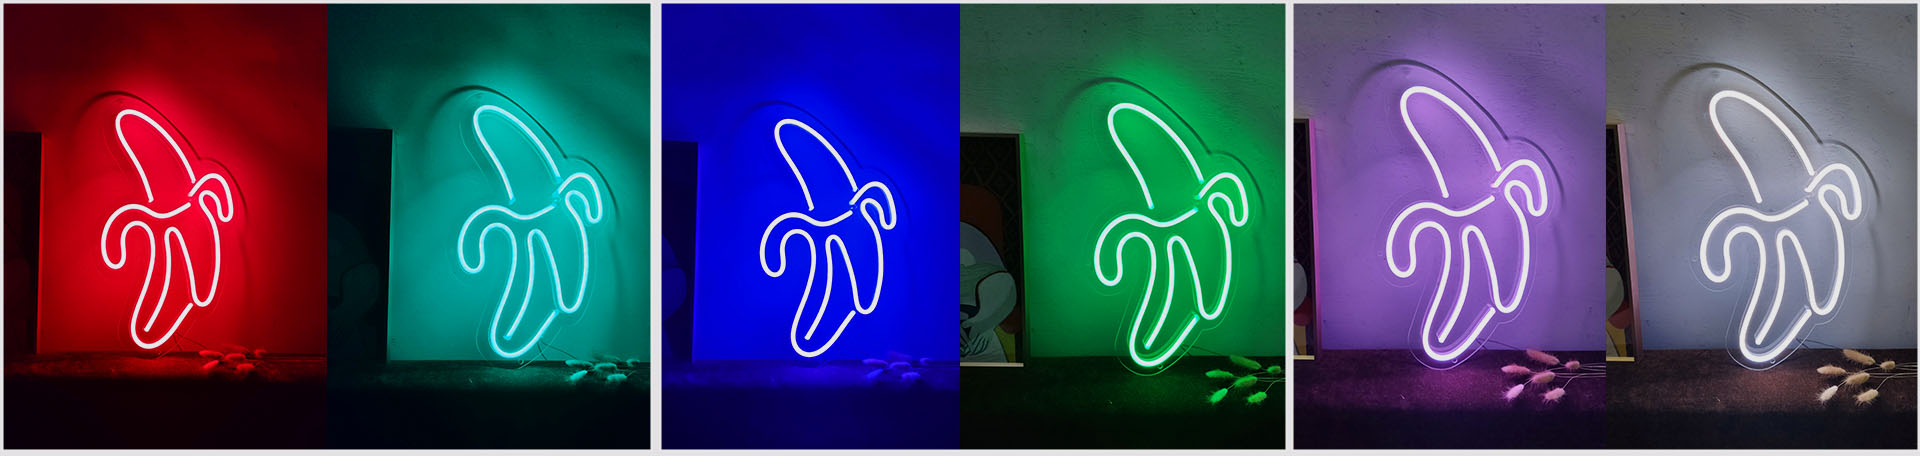 Banana neon light sign